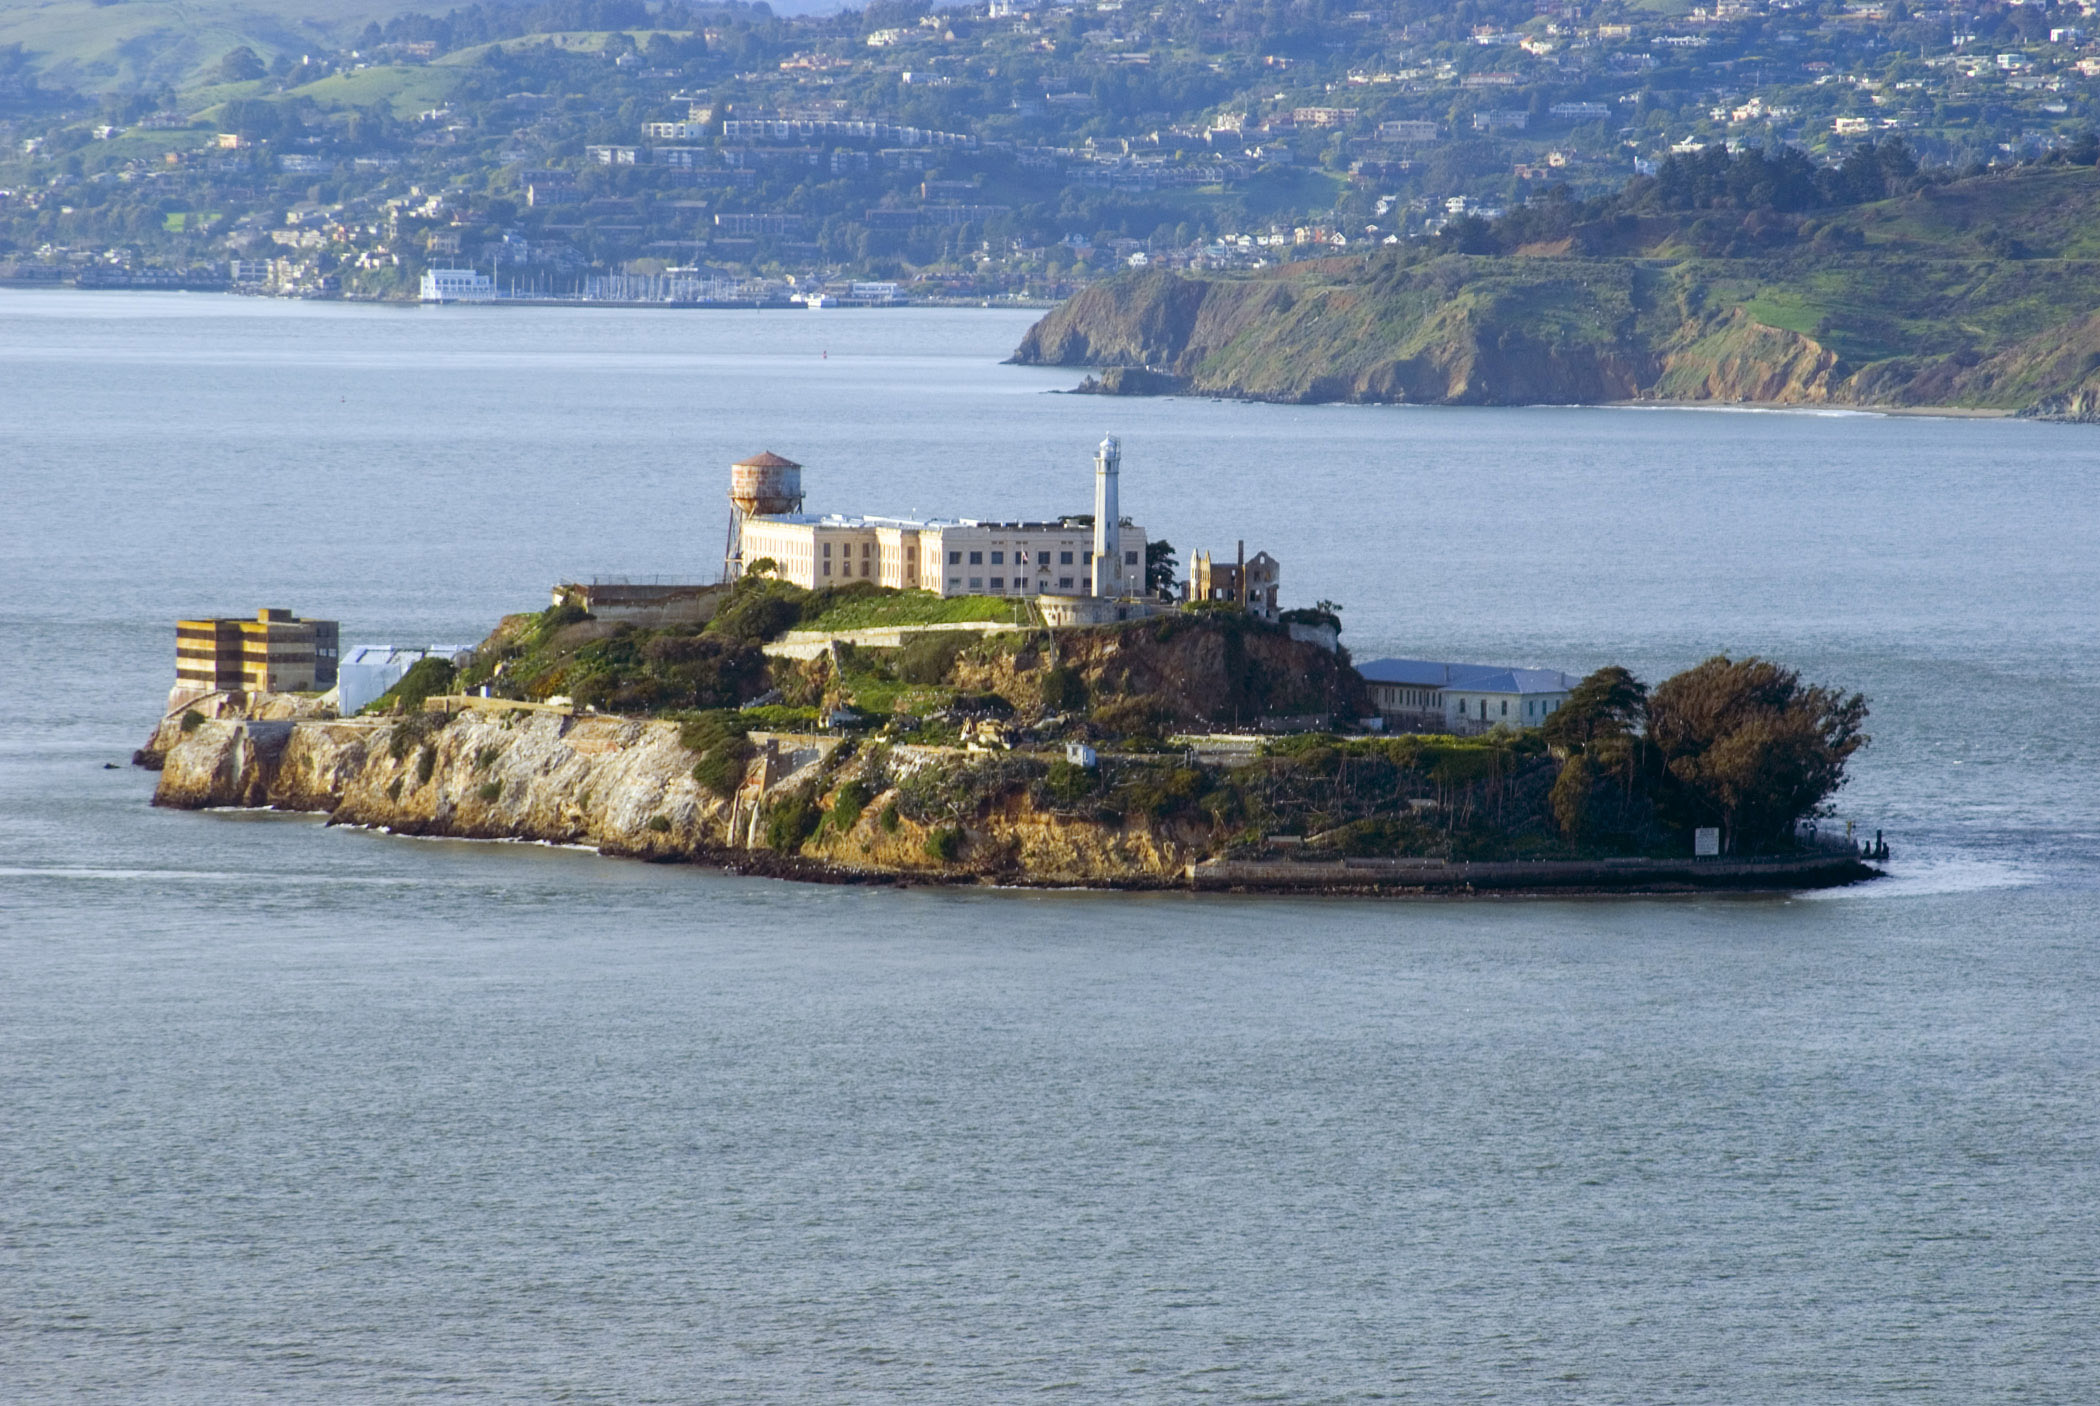 http://www.photoeverywhere.co.uk/west/usa/san_francisco/alcatraz_island_prison5869.jpg